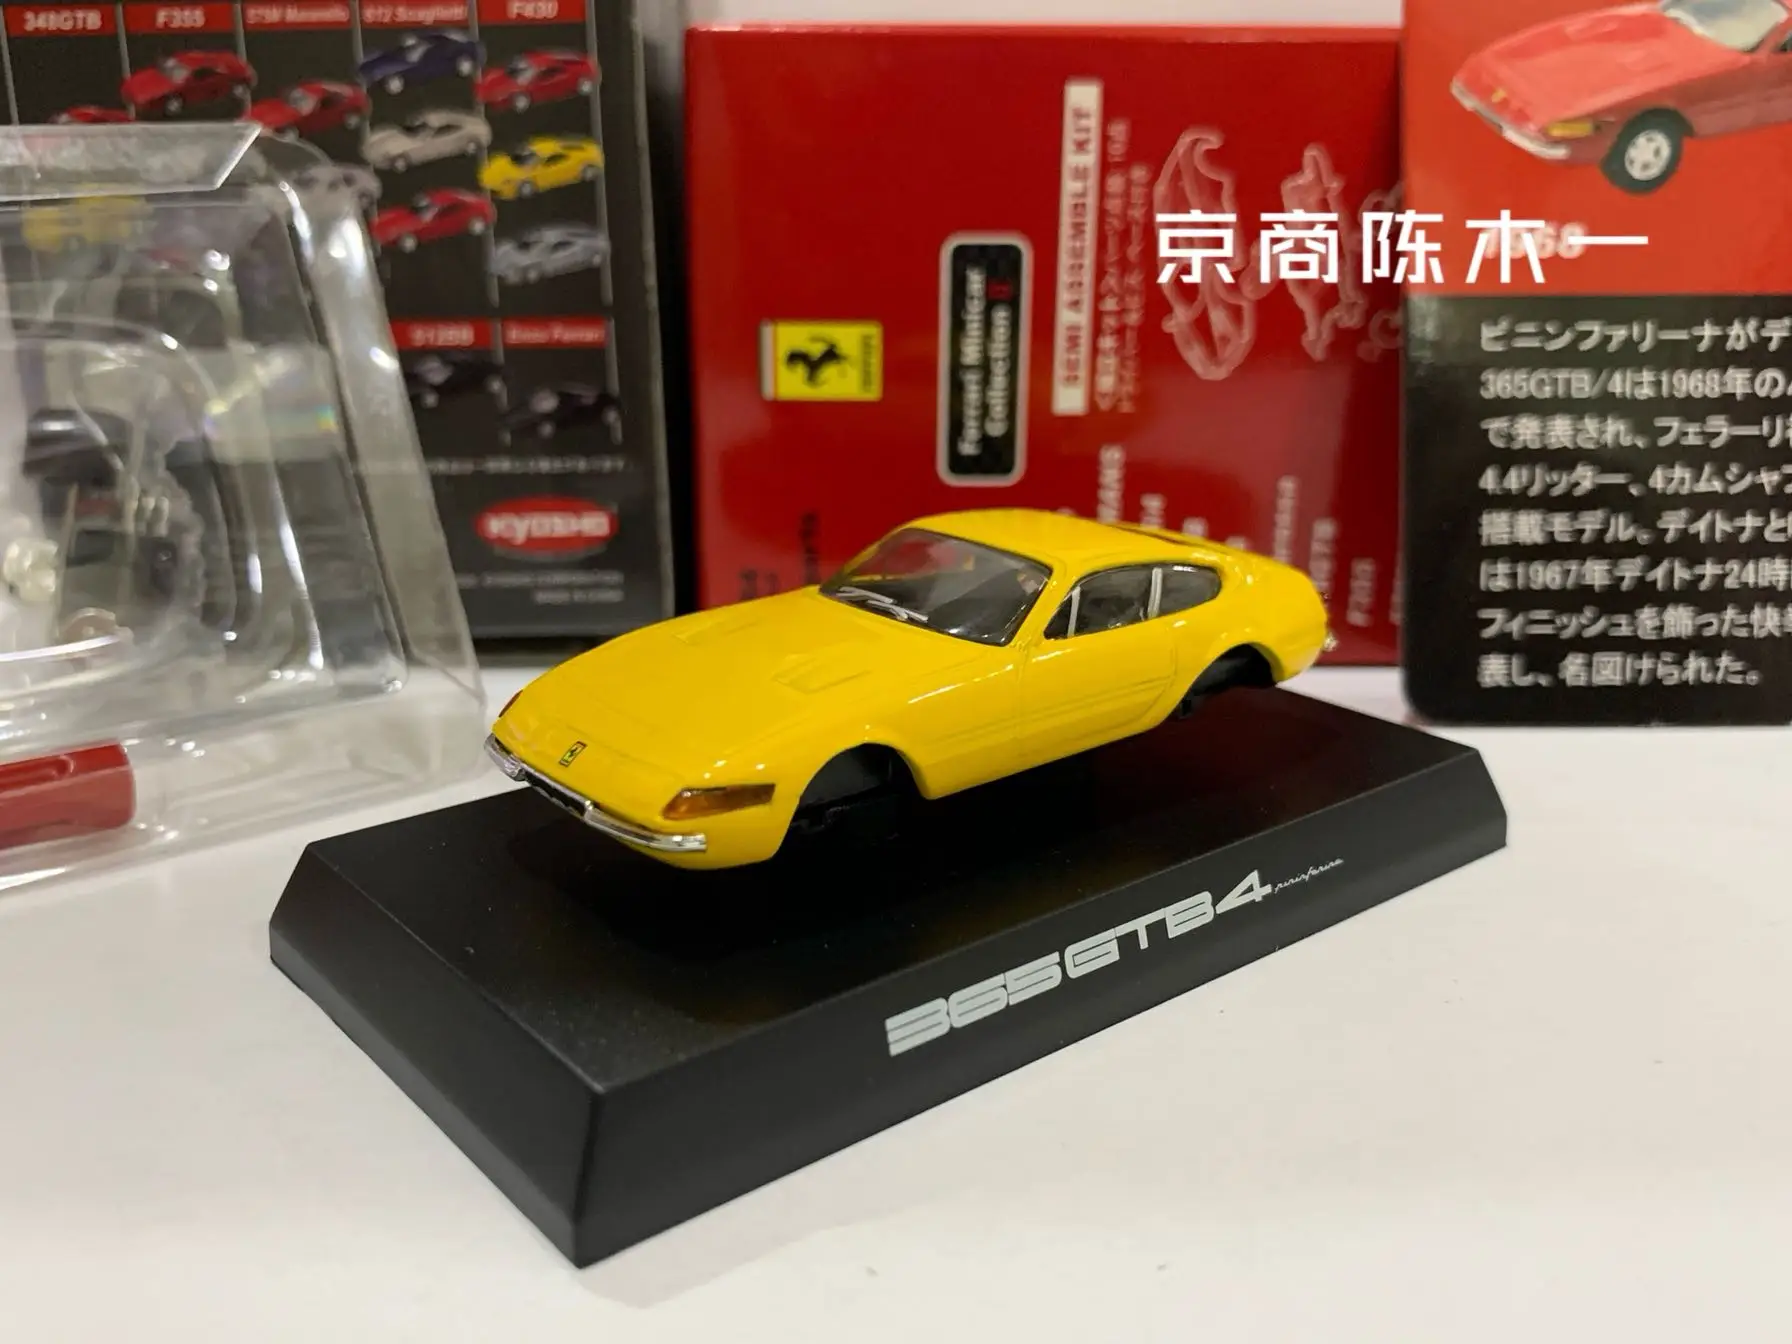 

1/64 KYOSHO Ferrari 365 GTB4 Collection of die-cast alloy assembled car decoration model toys